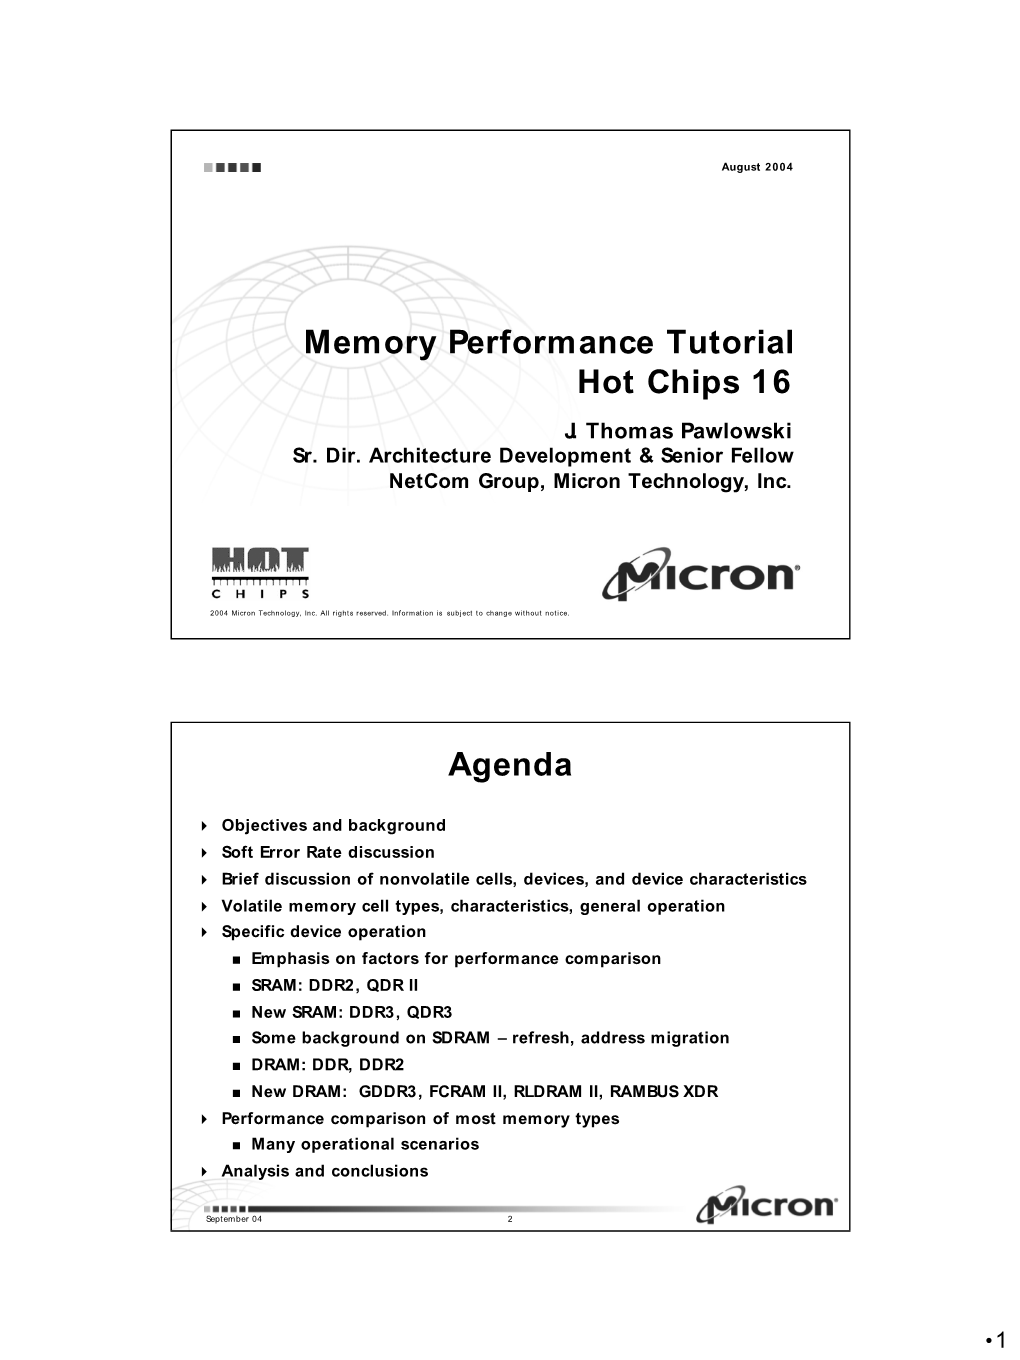 Memory Performance Tutorial Hot Chips 16 Agenda